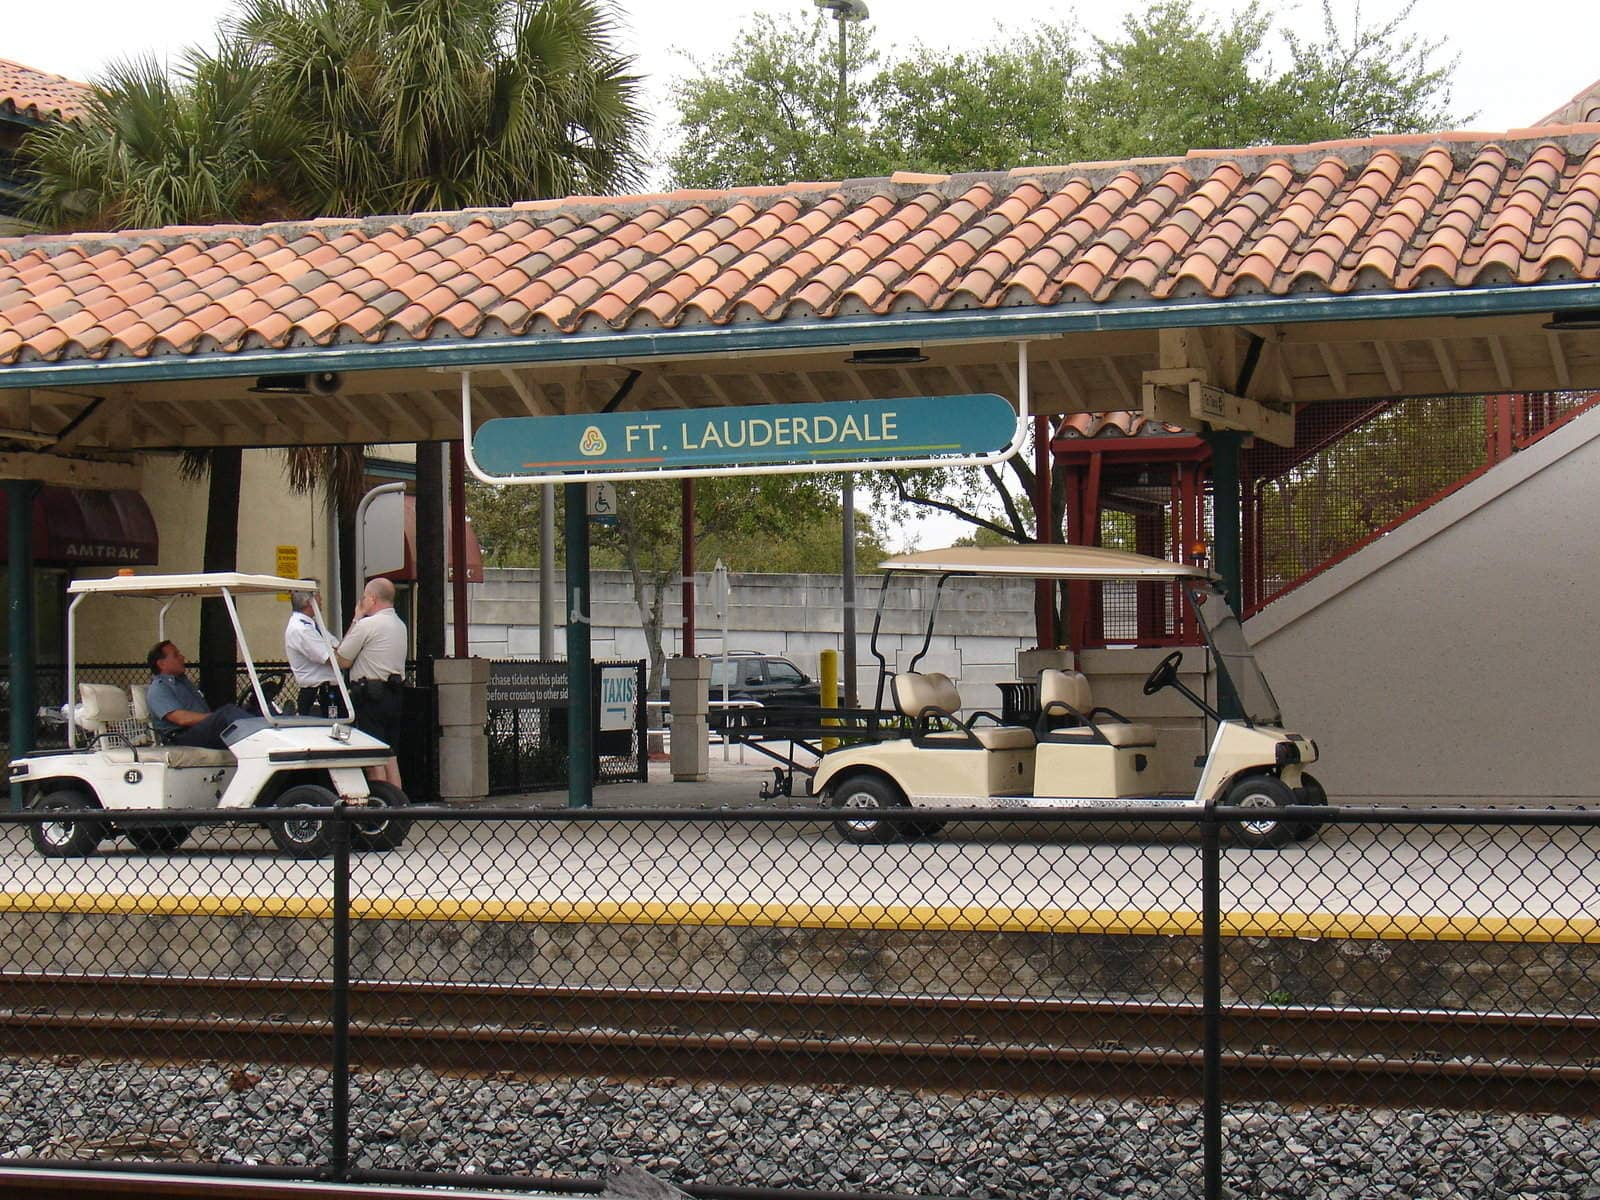 Fort Lauderdale railway station